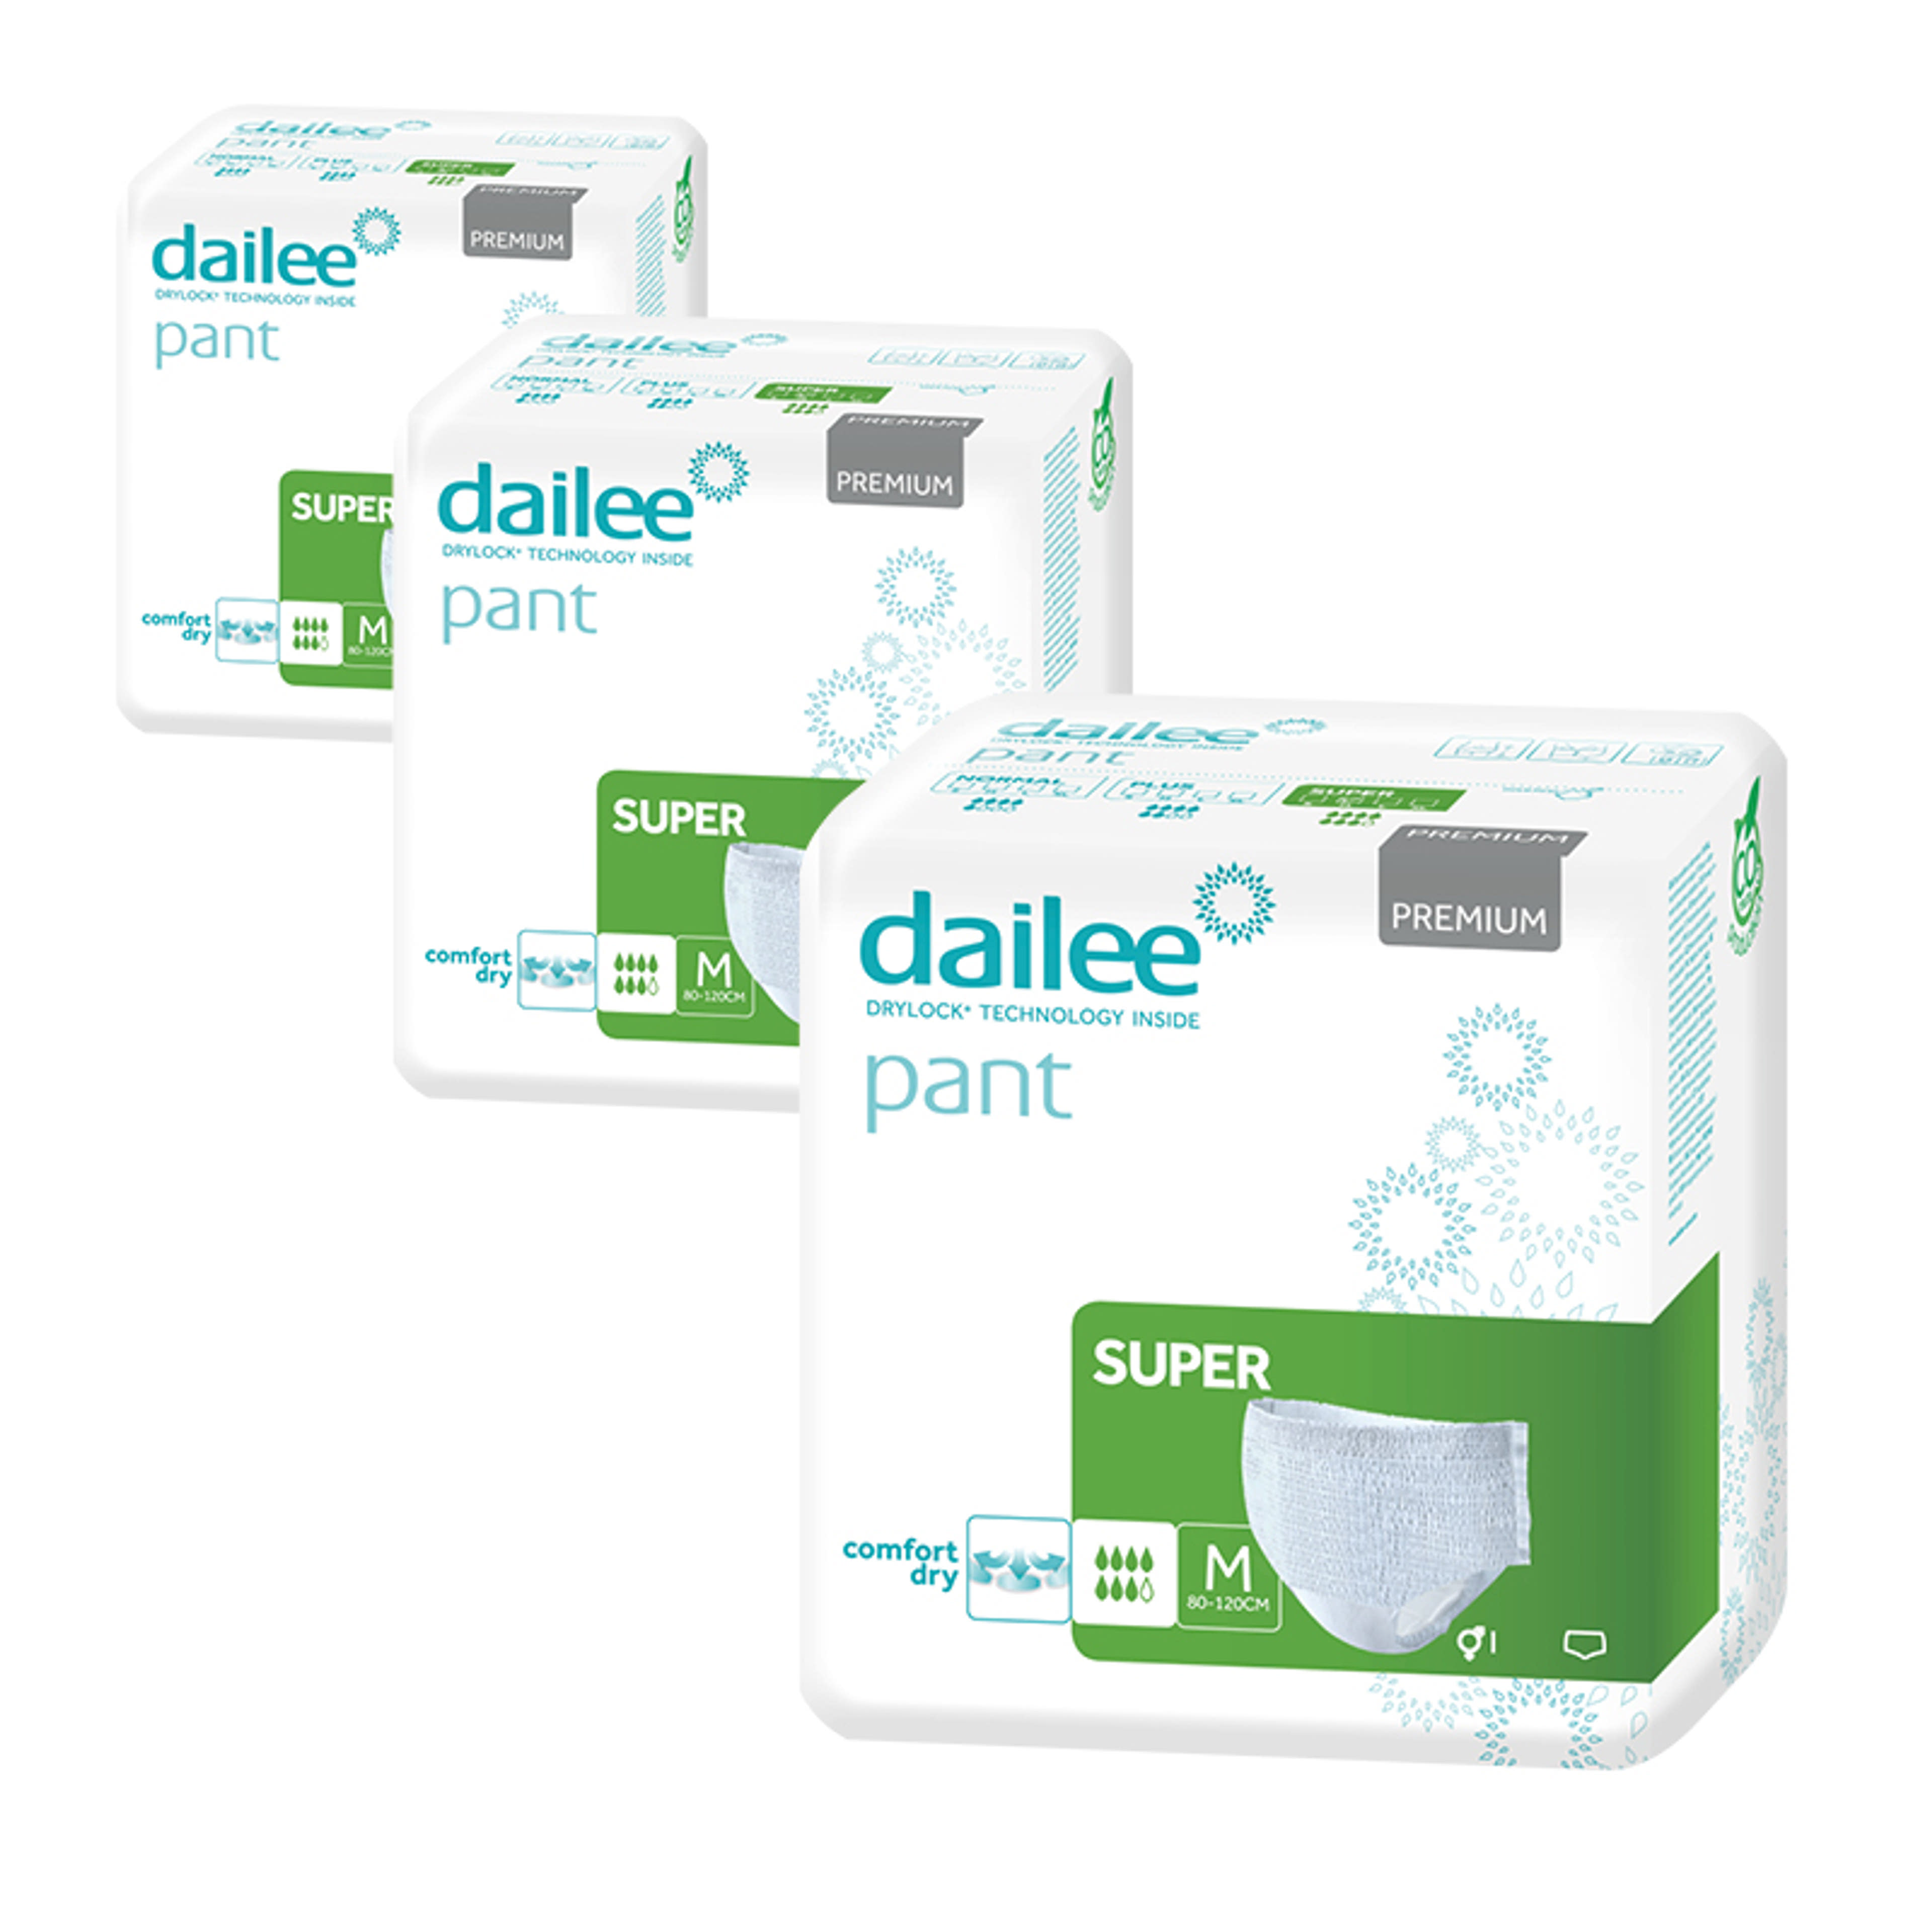 Dailee Pant Premium Super inkontinencia nadrág M-es méret - 3 db-os csomag